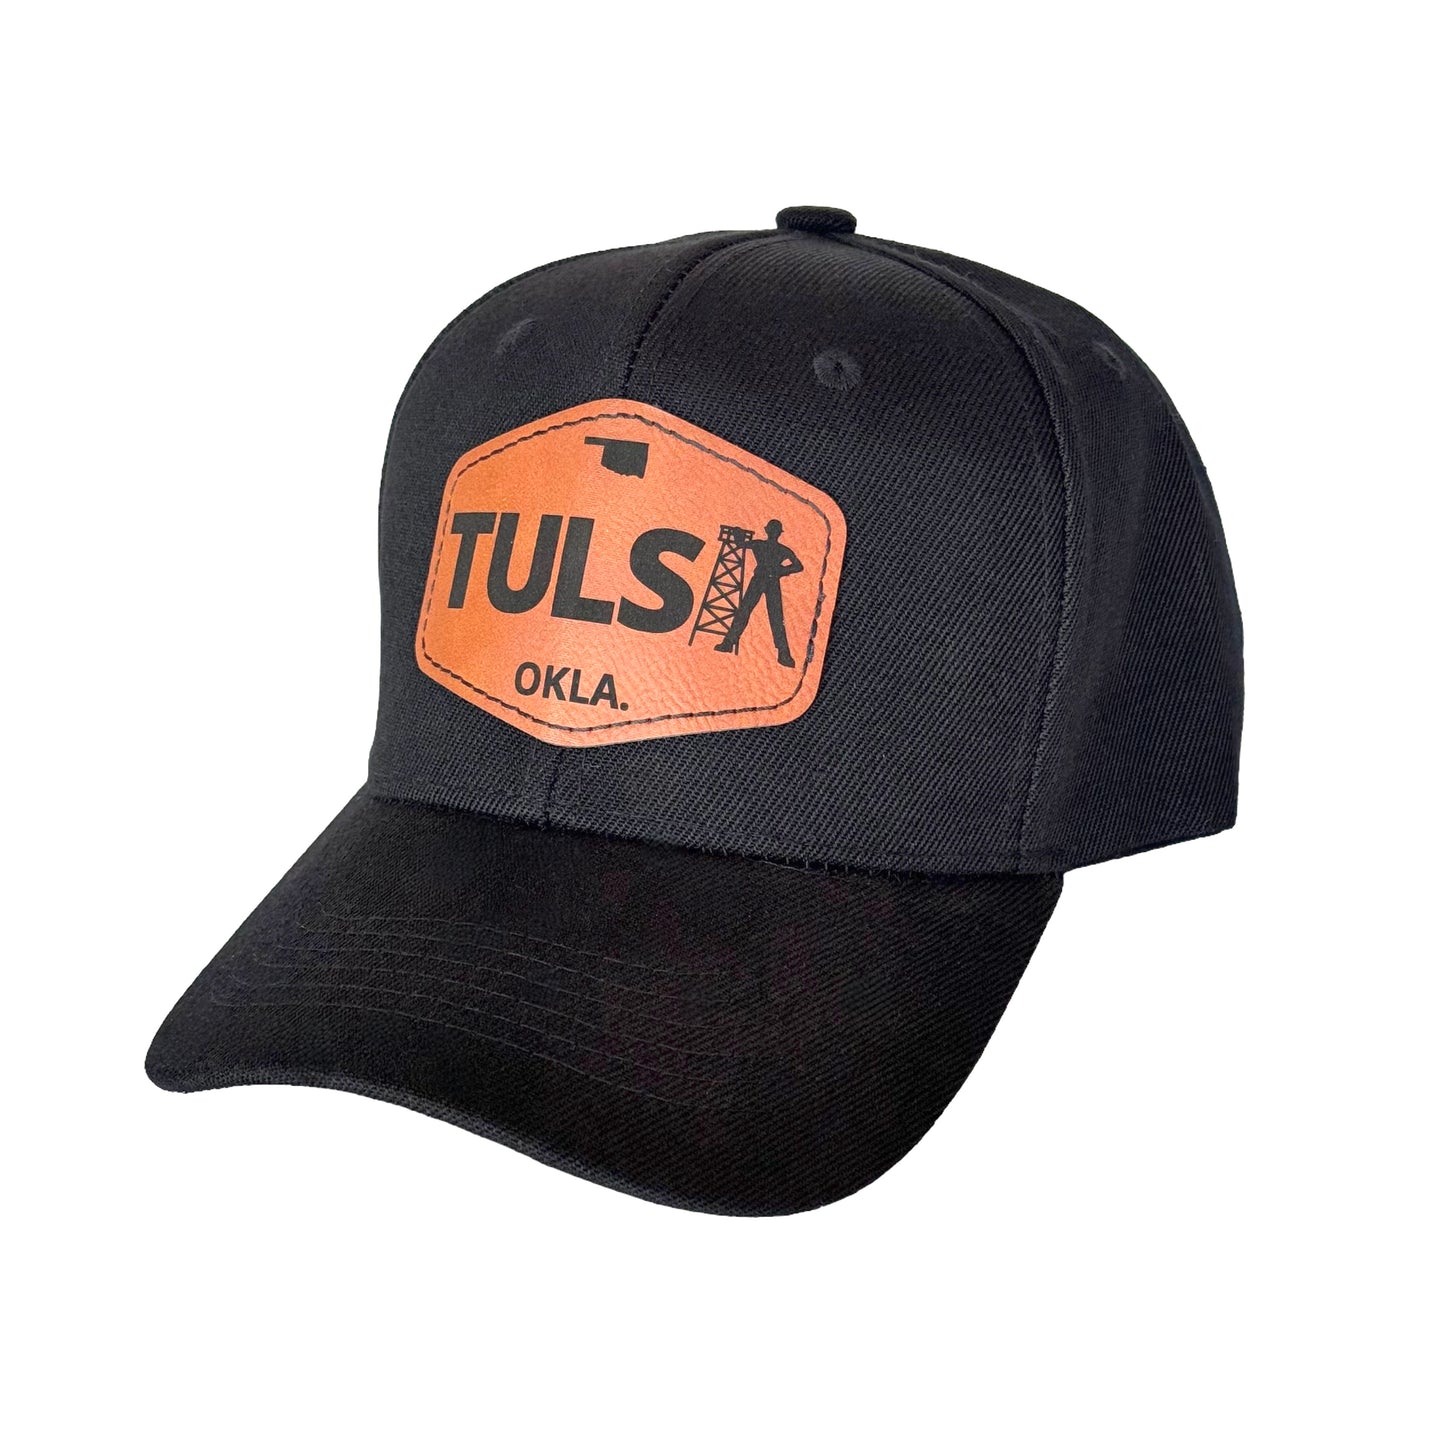 Tulsa Golden Driller Hat